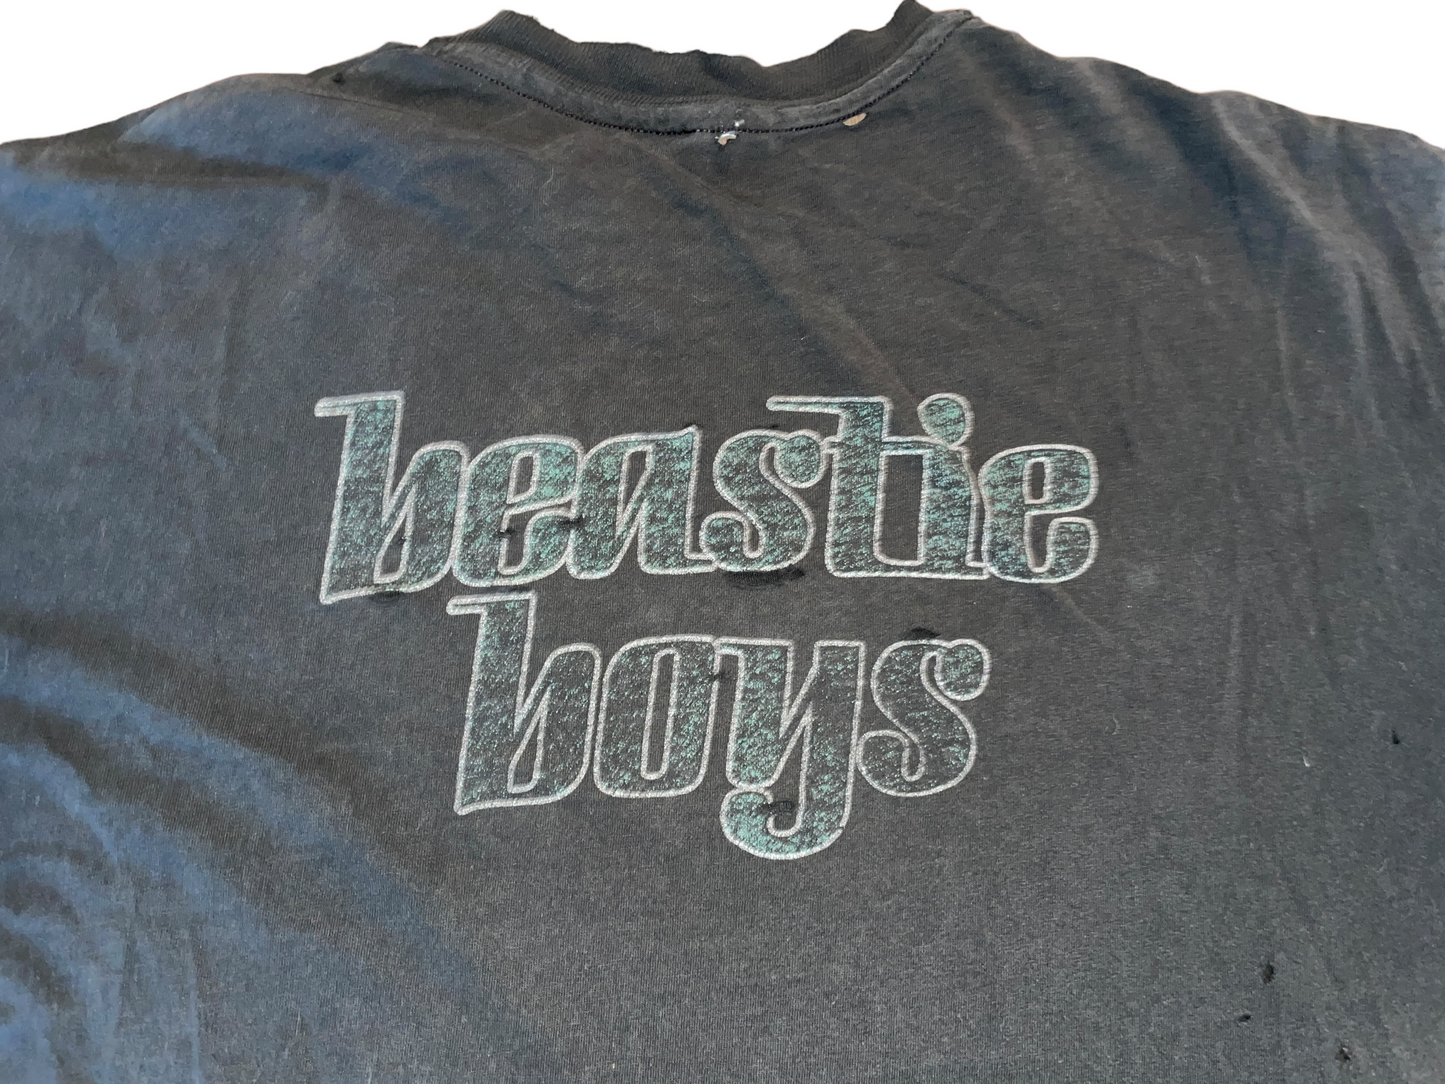 Vintage 1993 Beastie Boys Promo T-Shirt